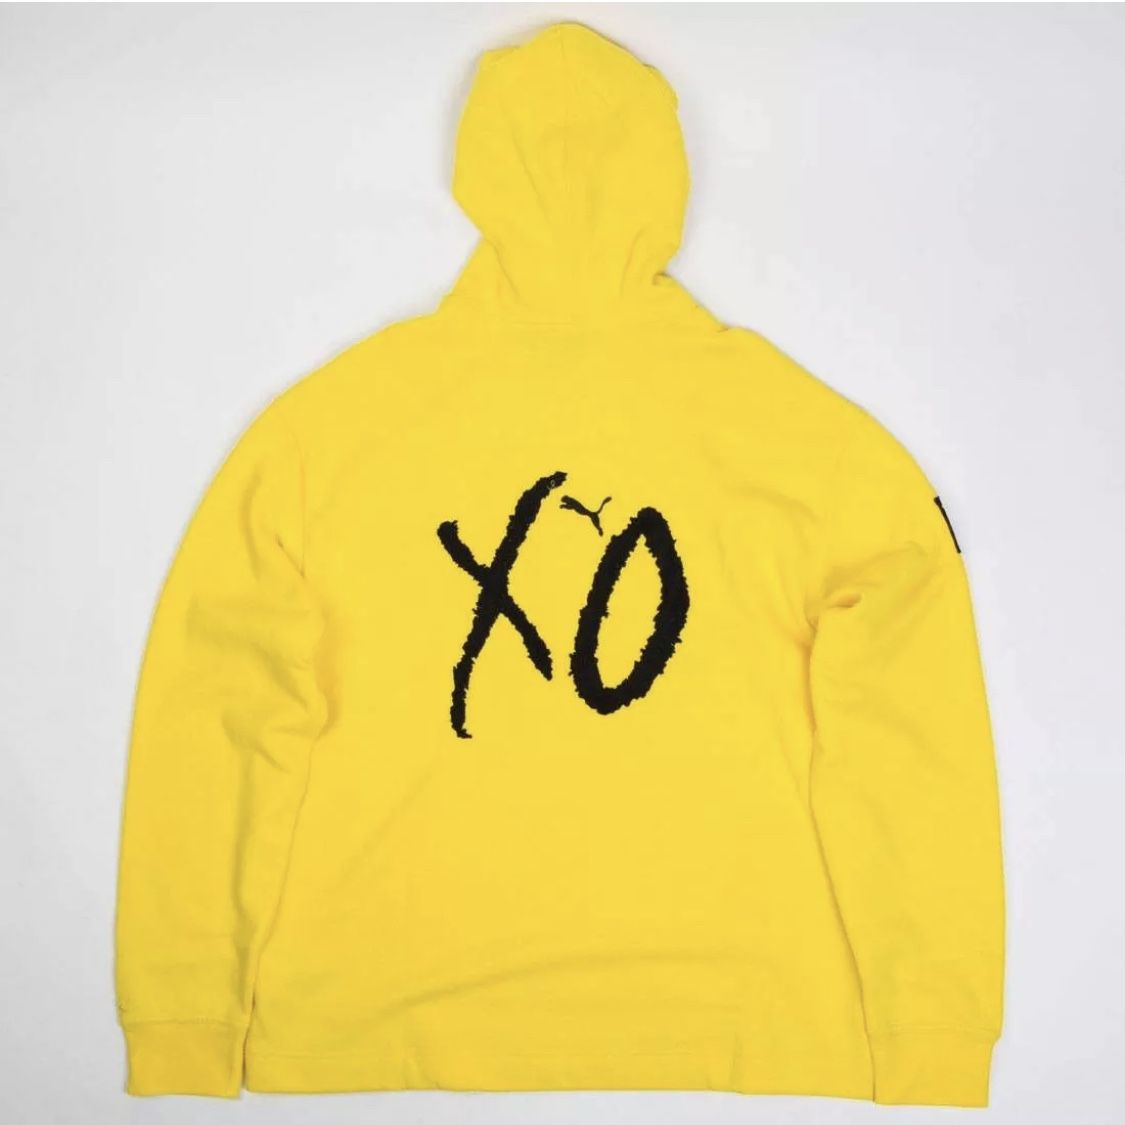 XL Yellow XO Weeknd Sweater